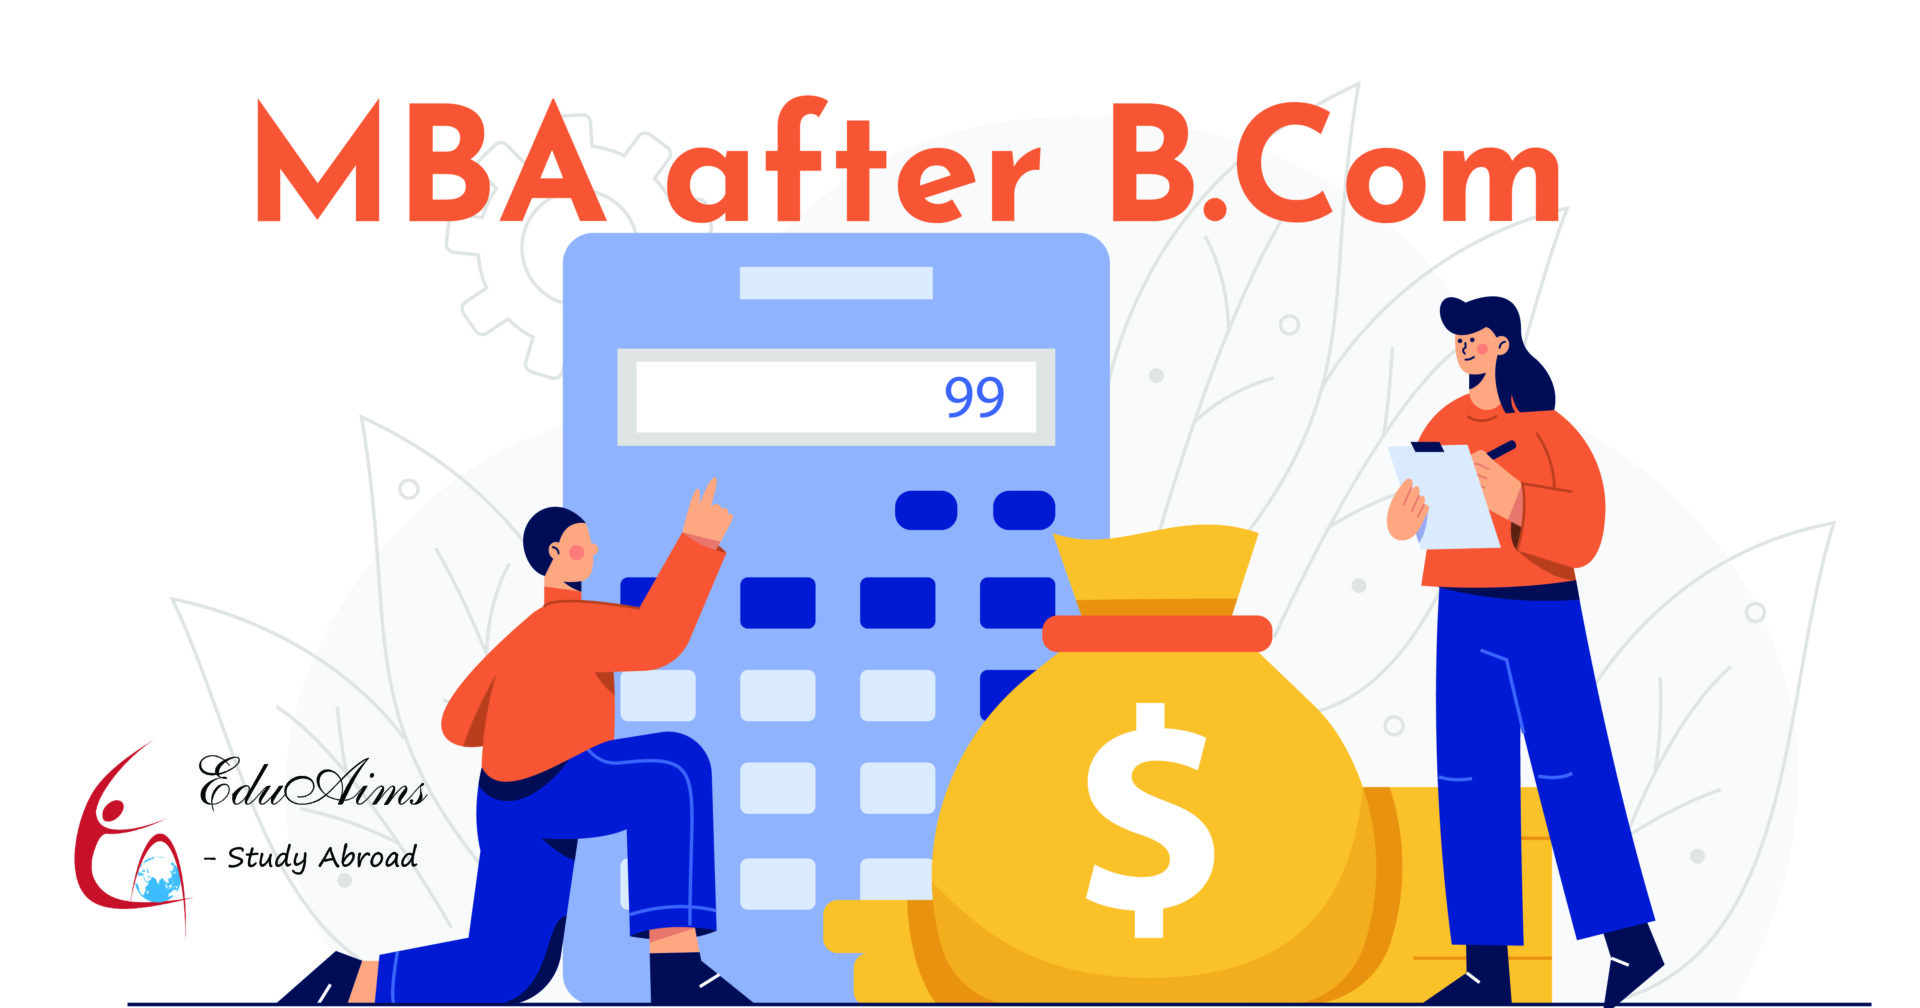 MBA after B.Com